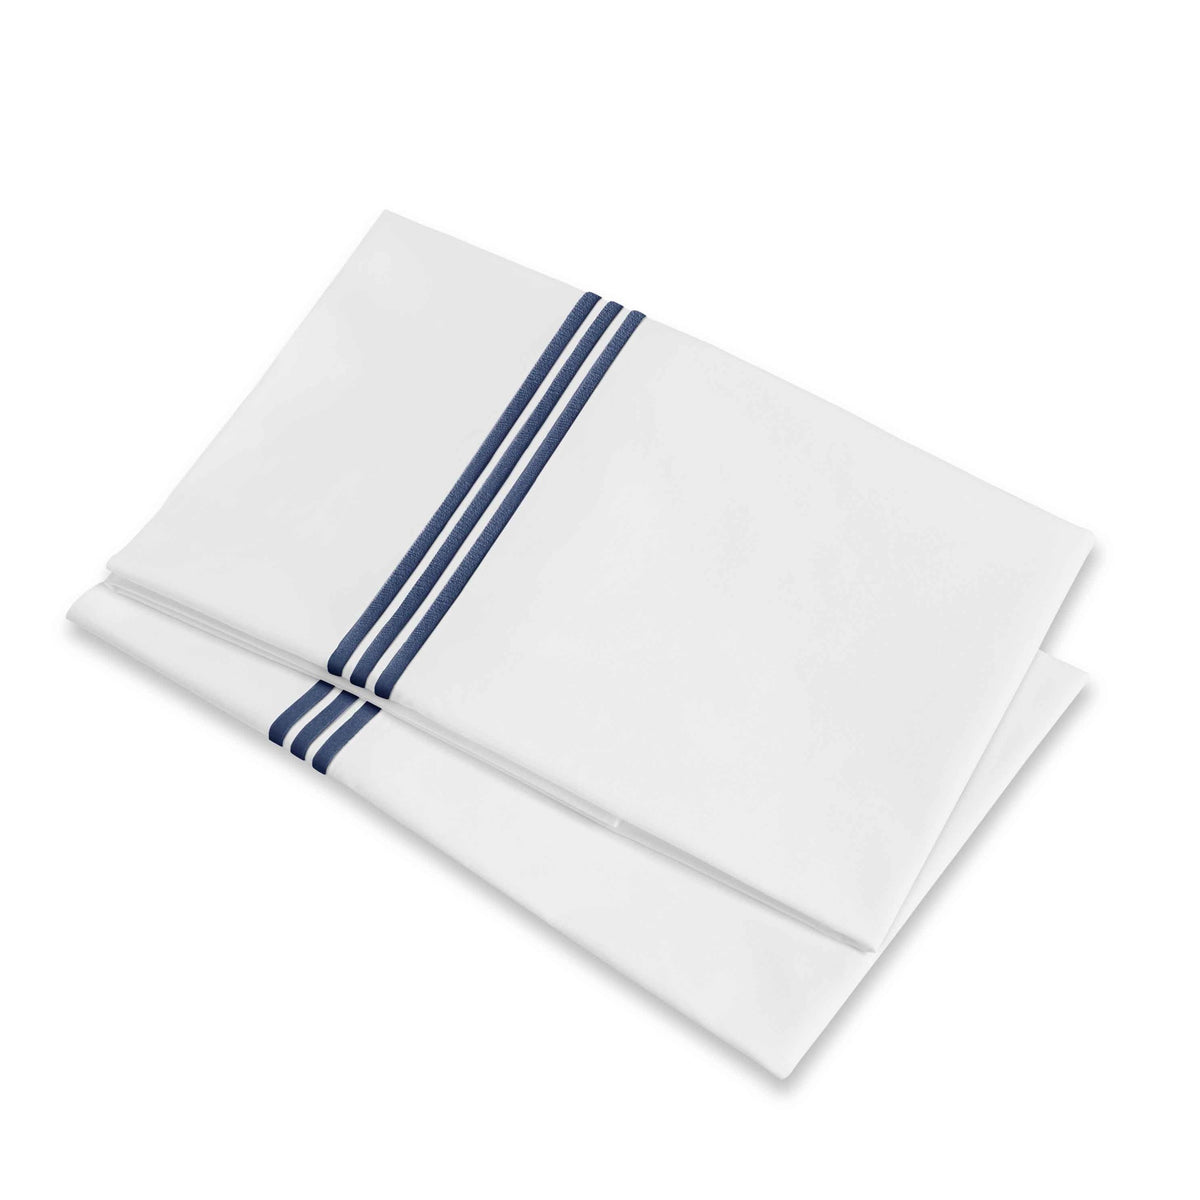 Folded Pillowcases of Signoria Platinum Percale Bedding in White/Midnight Blue Color